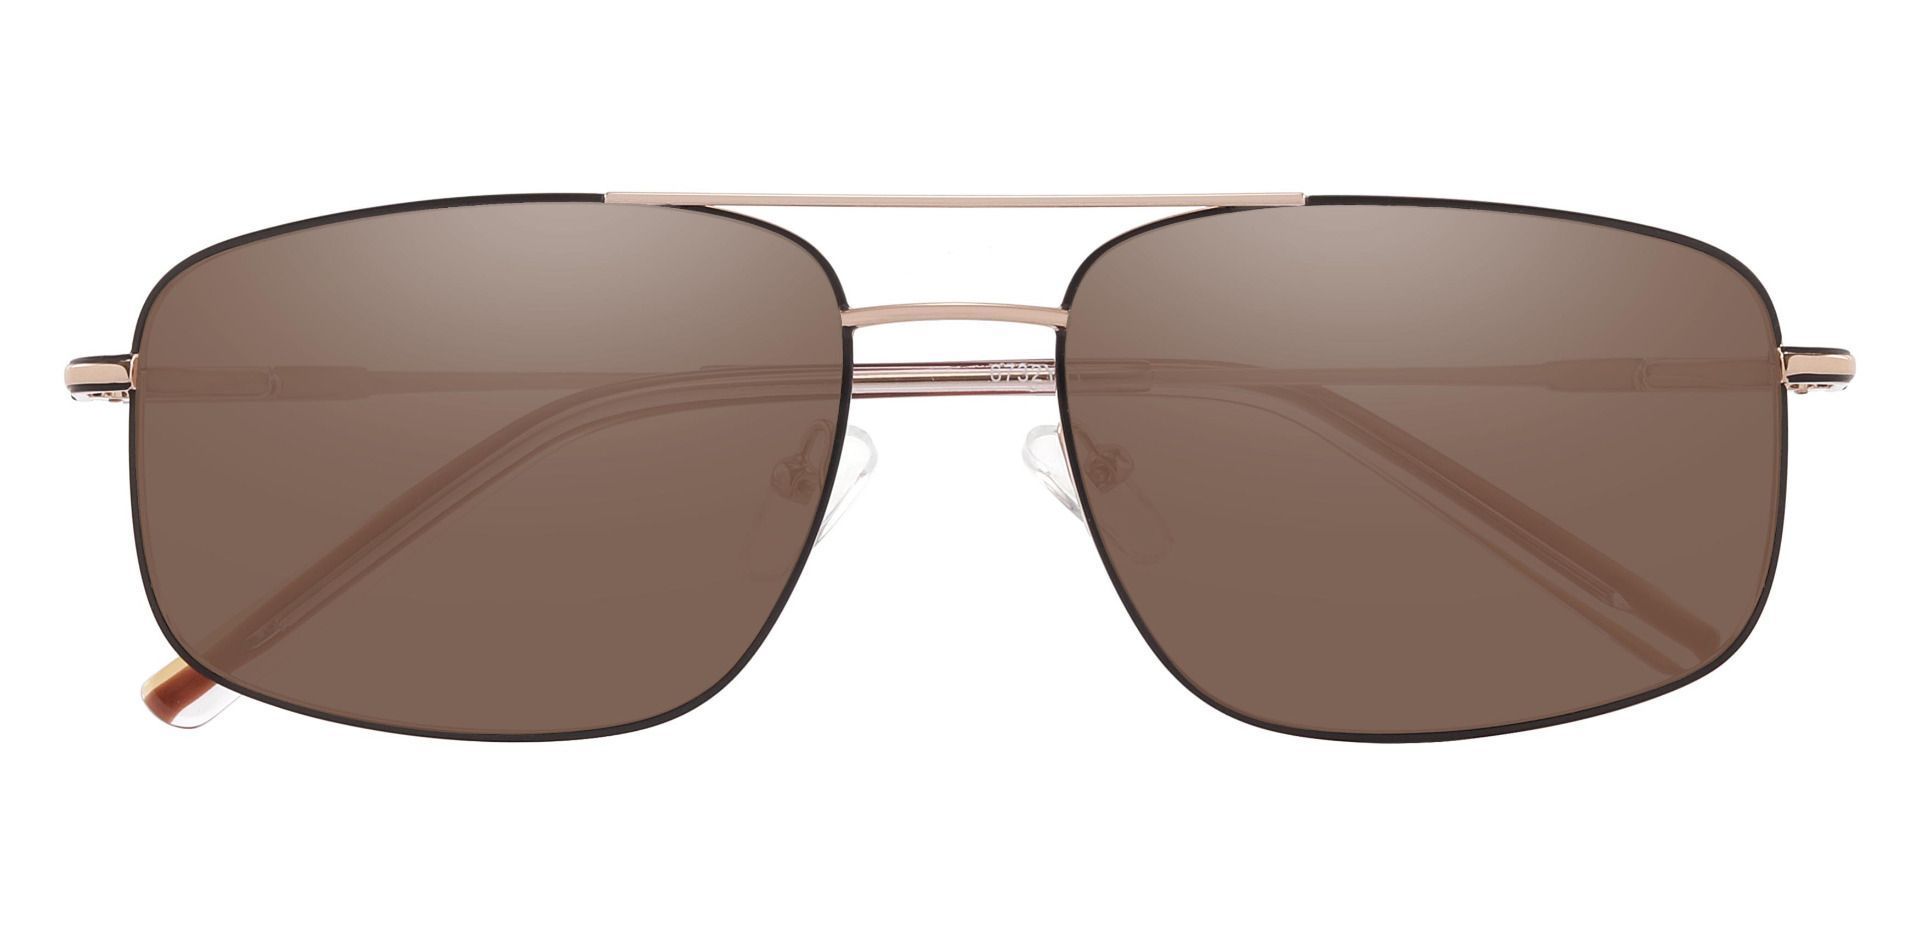 Turner Aviator Reading Sunglasses - Gold Frame With Brown Lenses